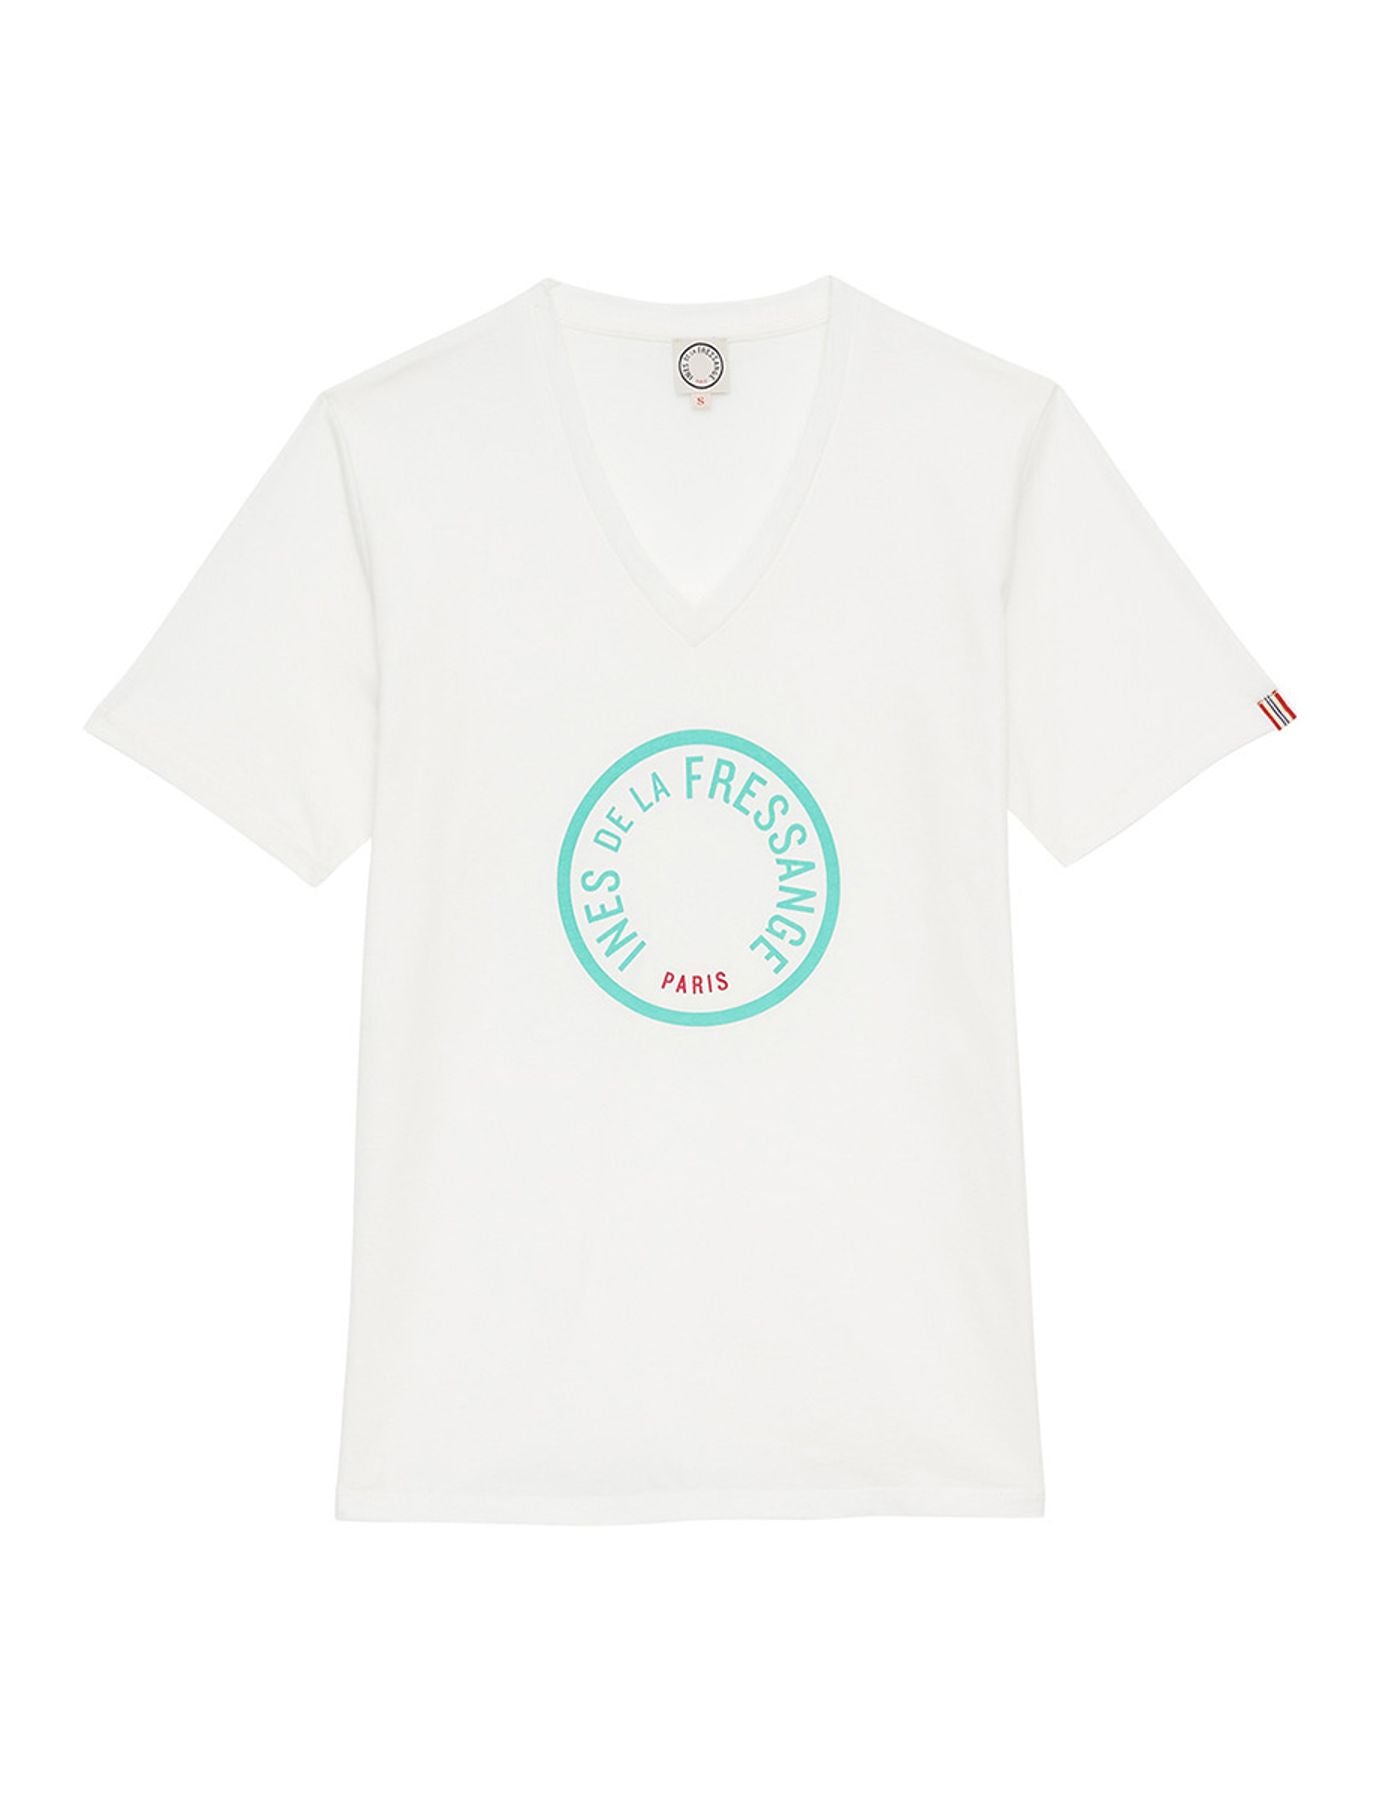 tee-shirt-pia-blanc-logo-turquoise